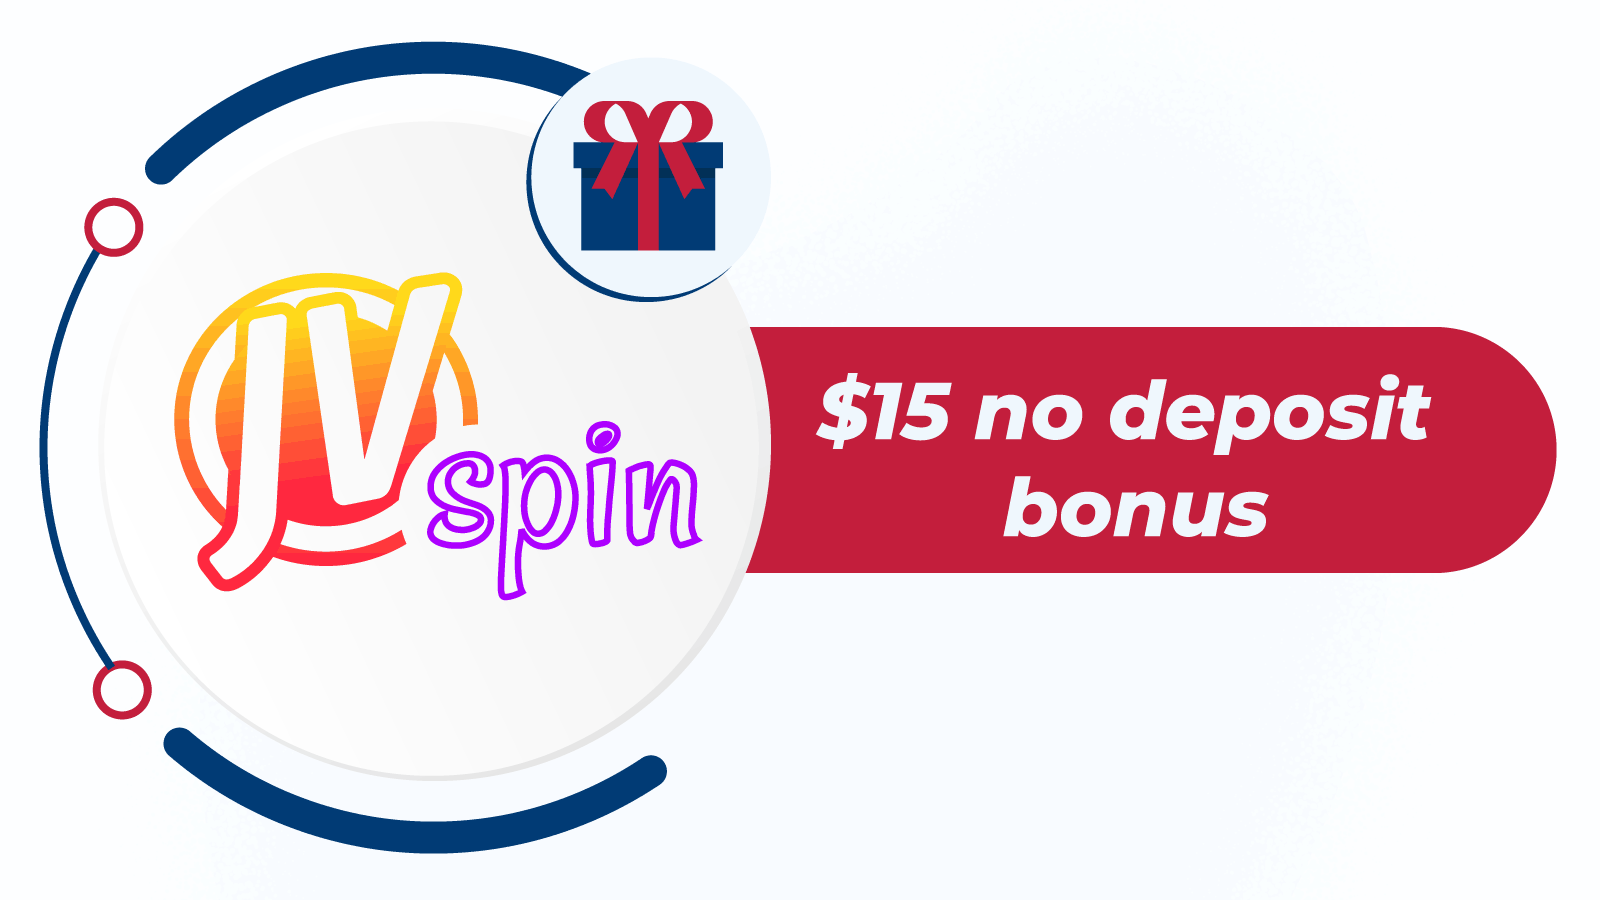 Why we chose JVSpin’s R$15 no deposit bonus